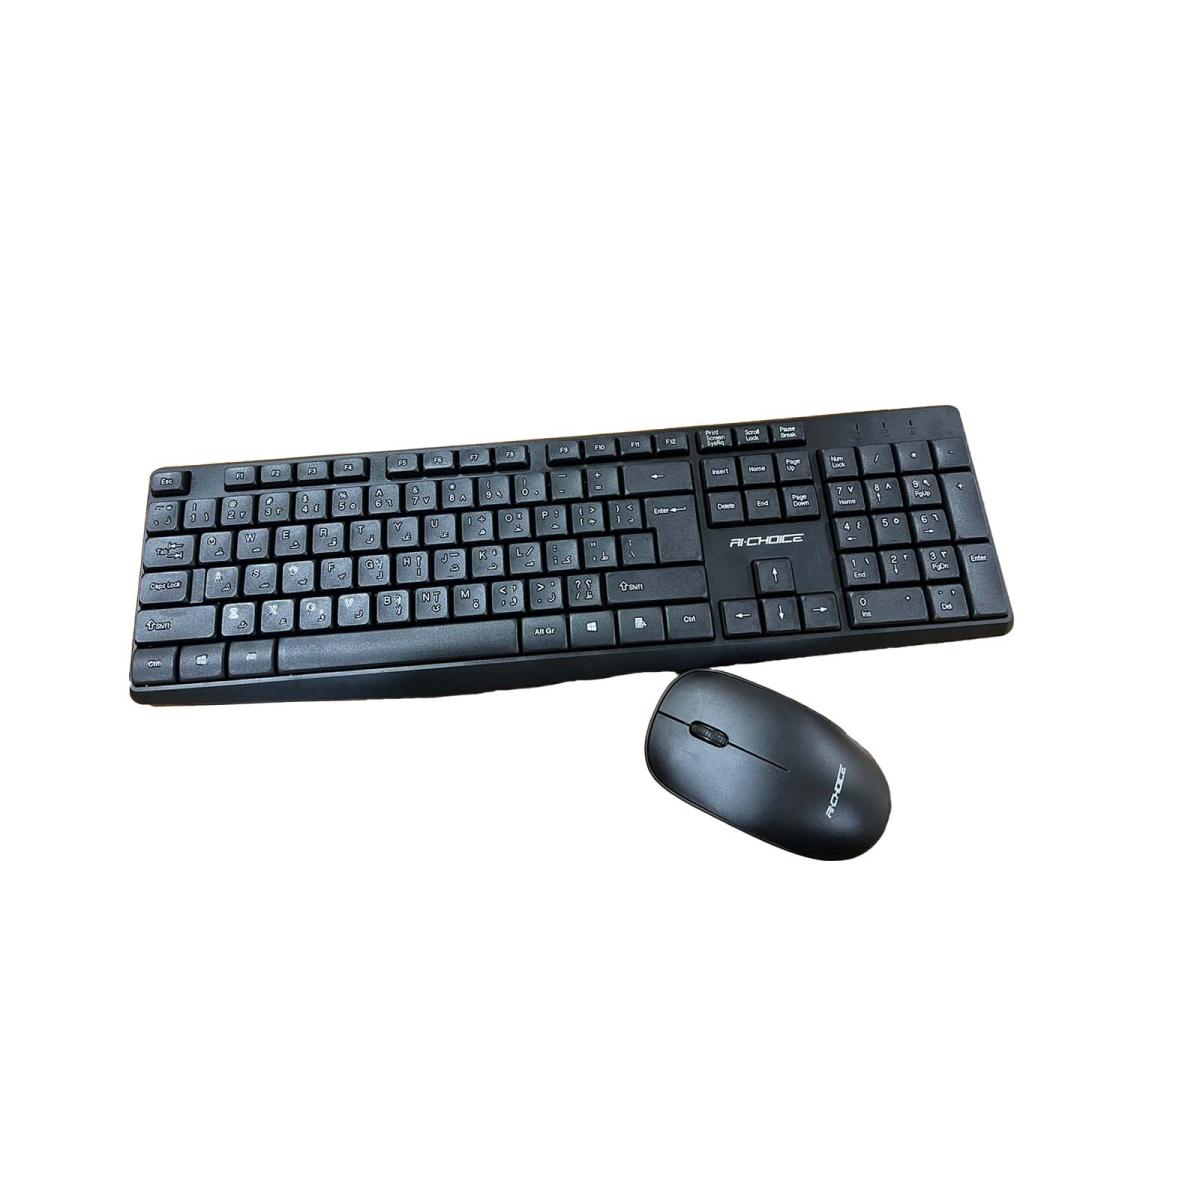 Ri-choice GK300 Wireless Keyboard and Mouse Combo